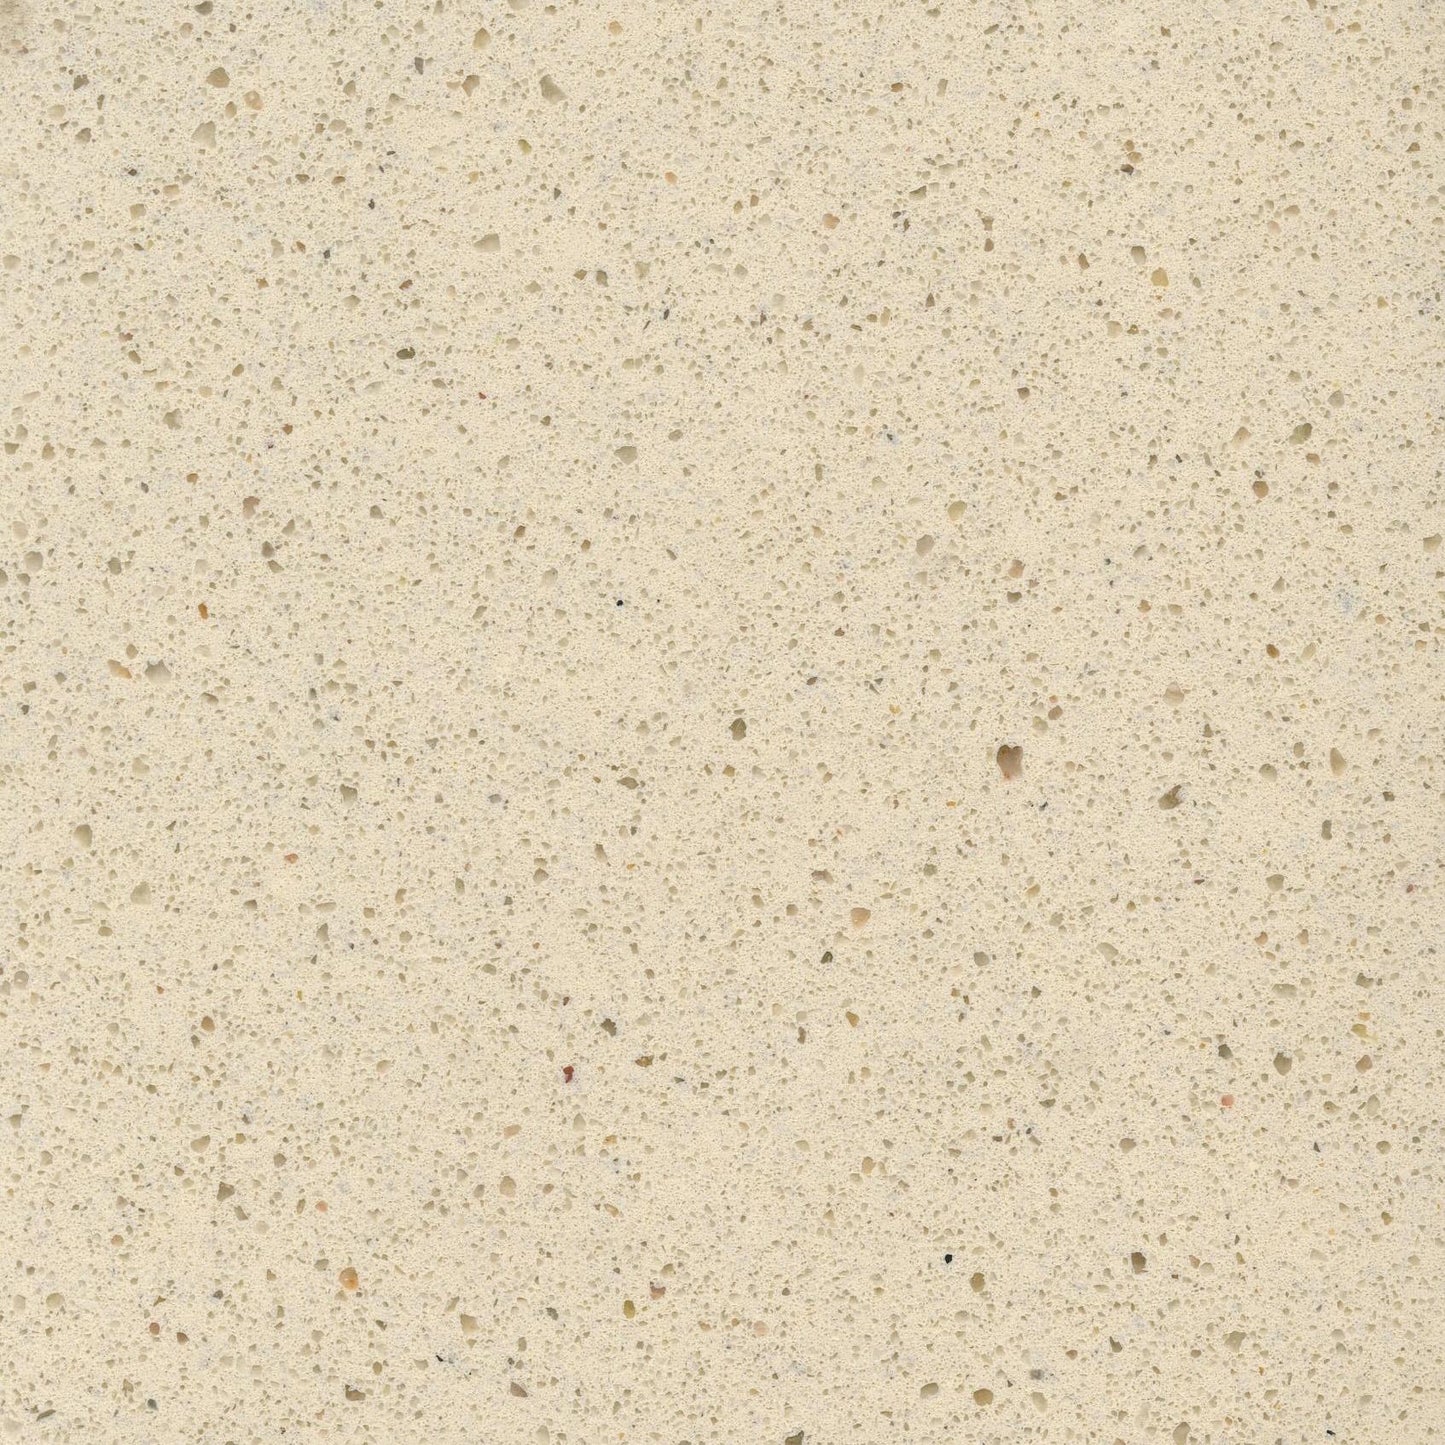 Capri Limestone Jumbo, Quartz Stone Surface Material - Outlet stock from Cosentino.